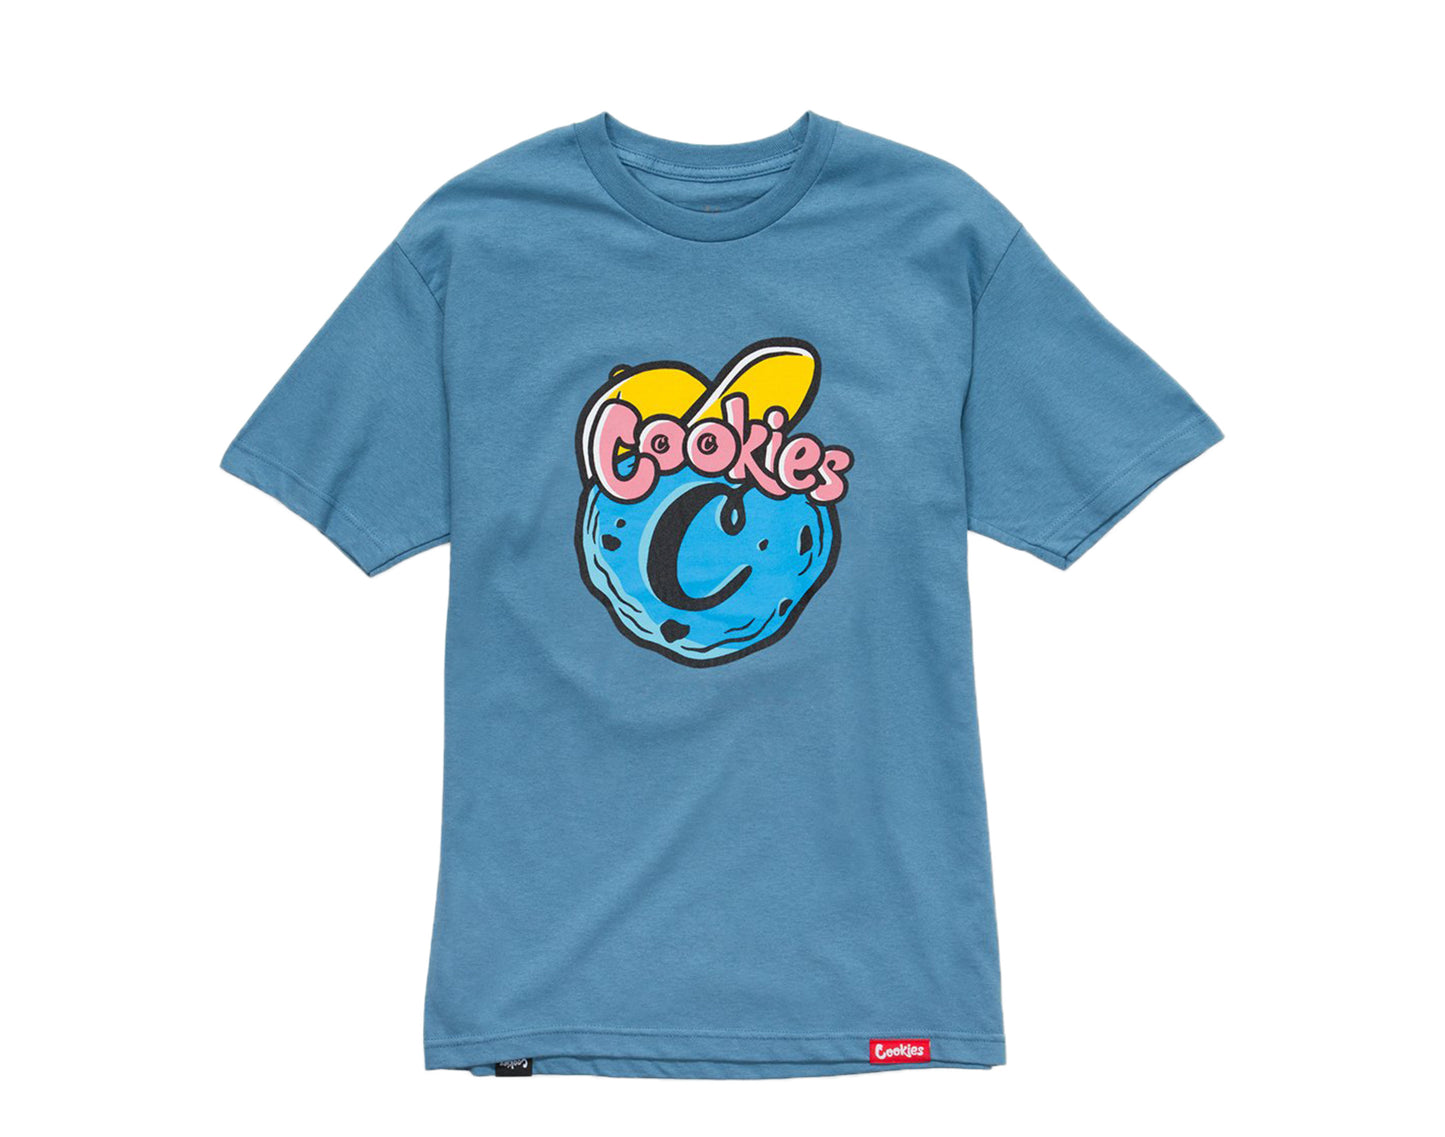 Cookies Animated Character Slate Blue Men's Tee Shirt 1546T4381-SLB